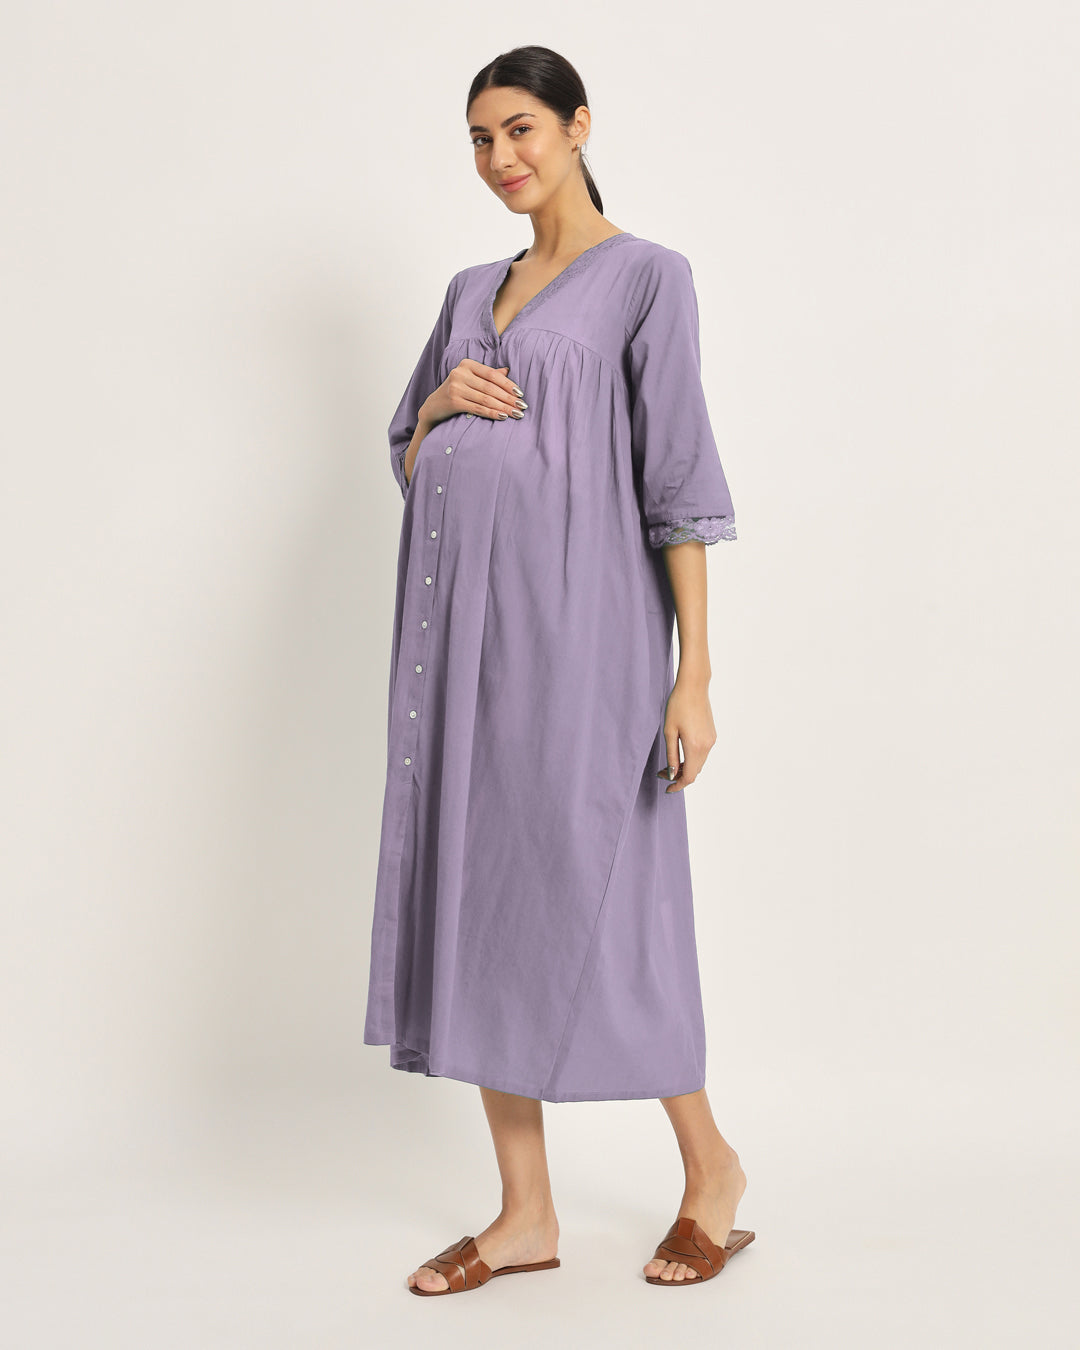 Combo: Lilac & Sage Green Stylish Preggo Maternity & Nursing Dress - Set of 2